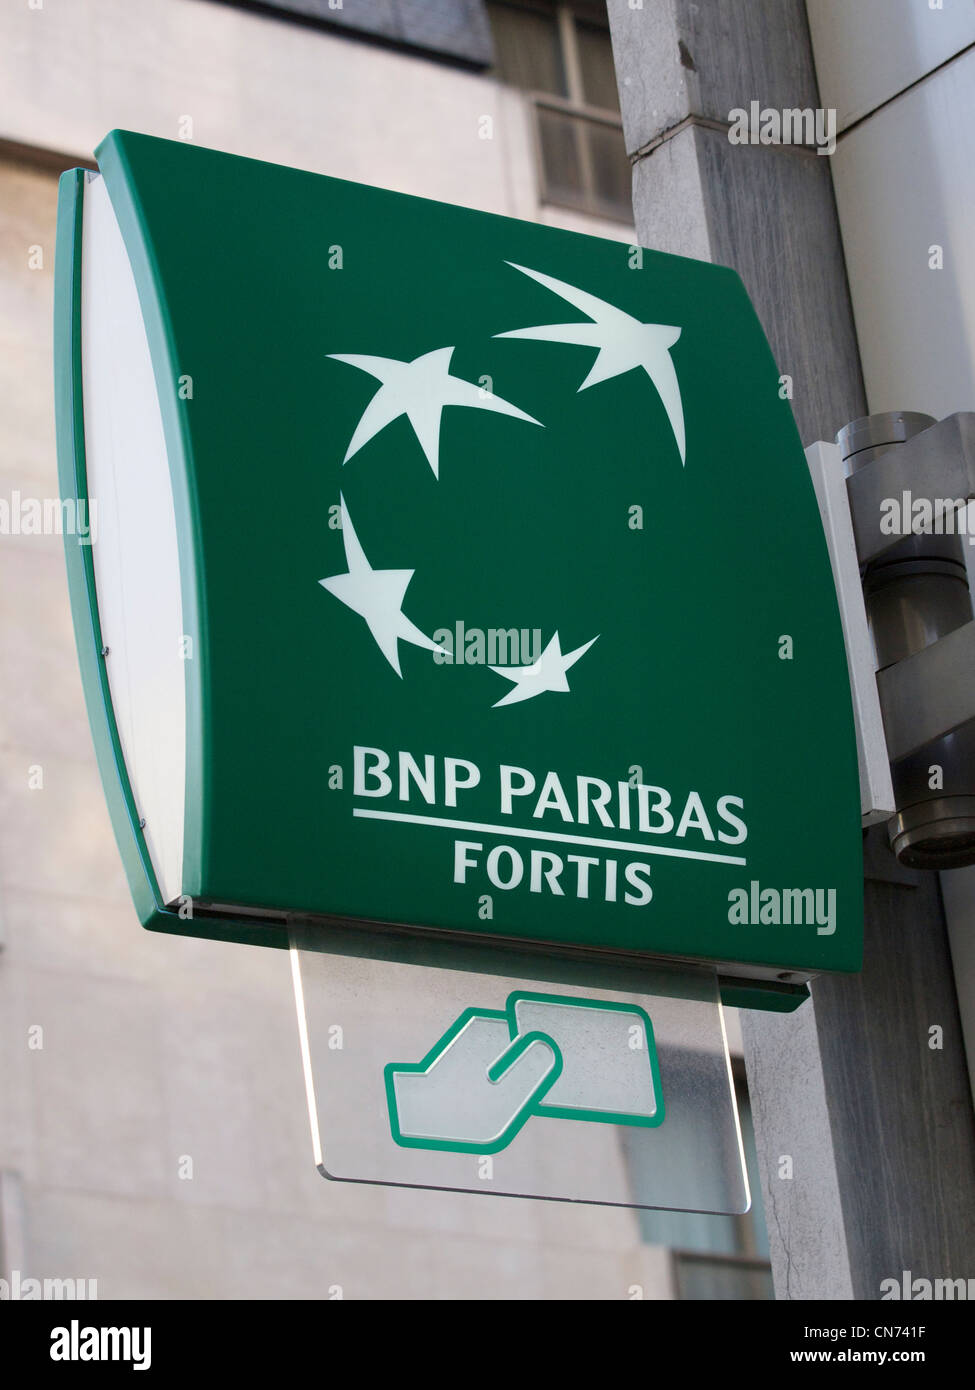 BNP Paribas Fortis sign in Brussels, Belgium Stock Photo